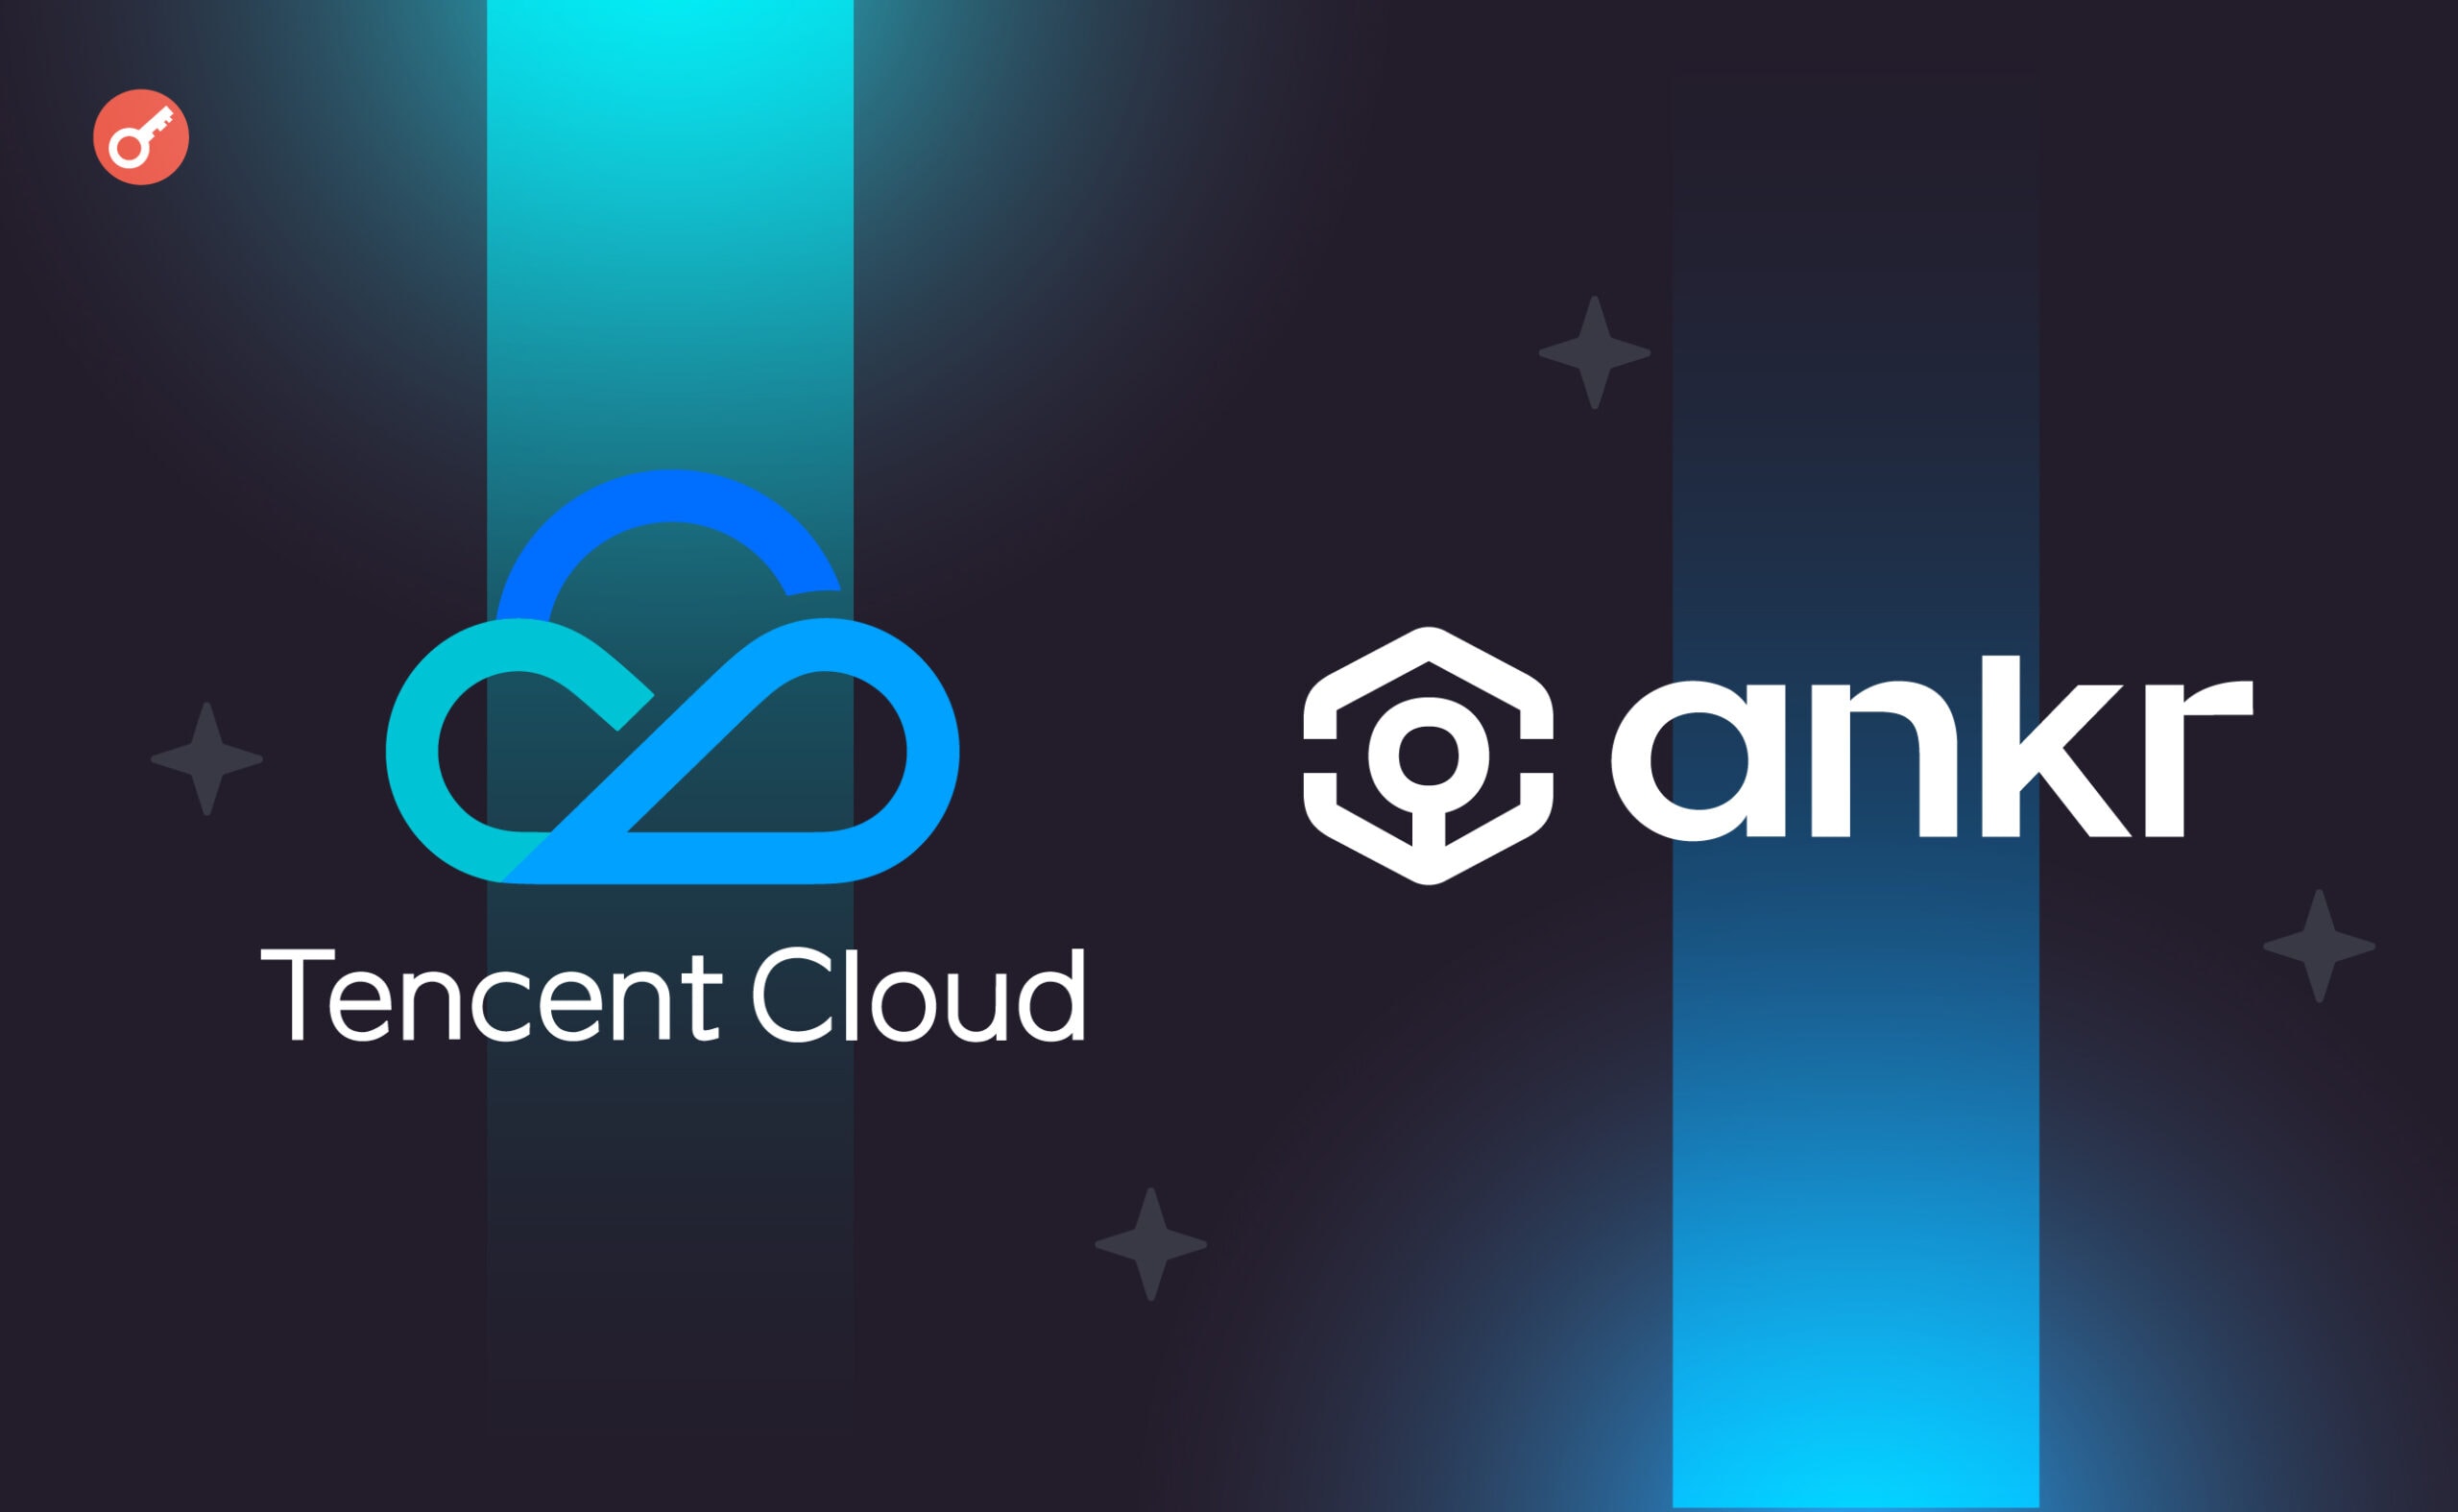 Ankr объявила о партнерстве с Tencent Cloud. Заглавный коллаж новости.